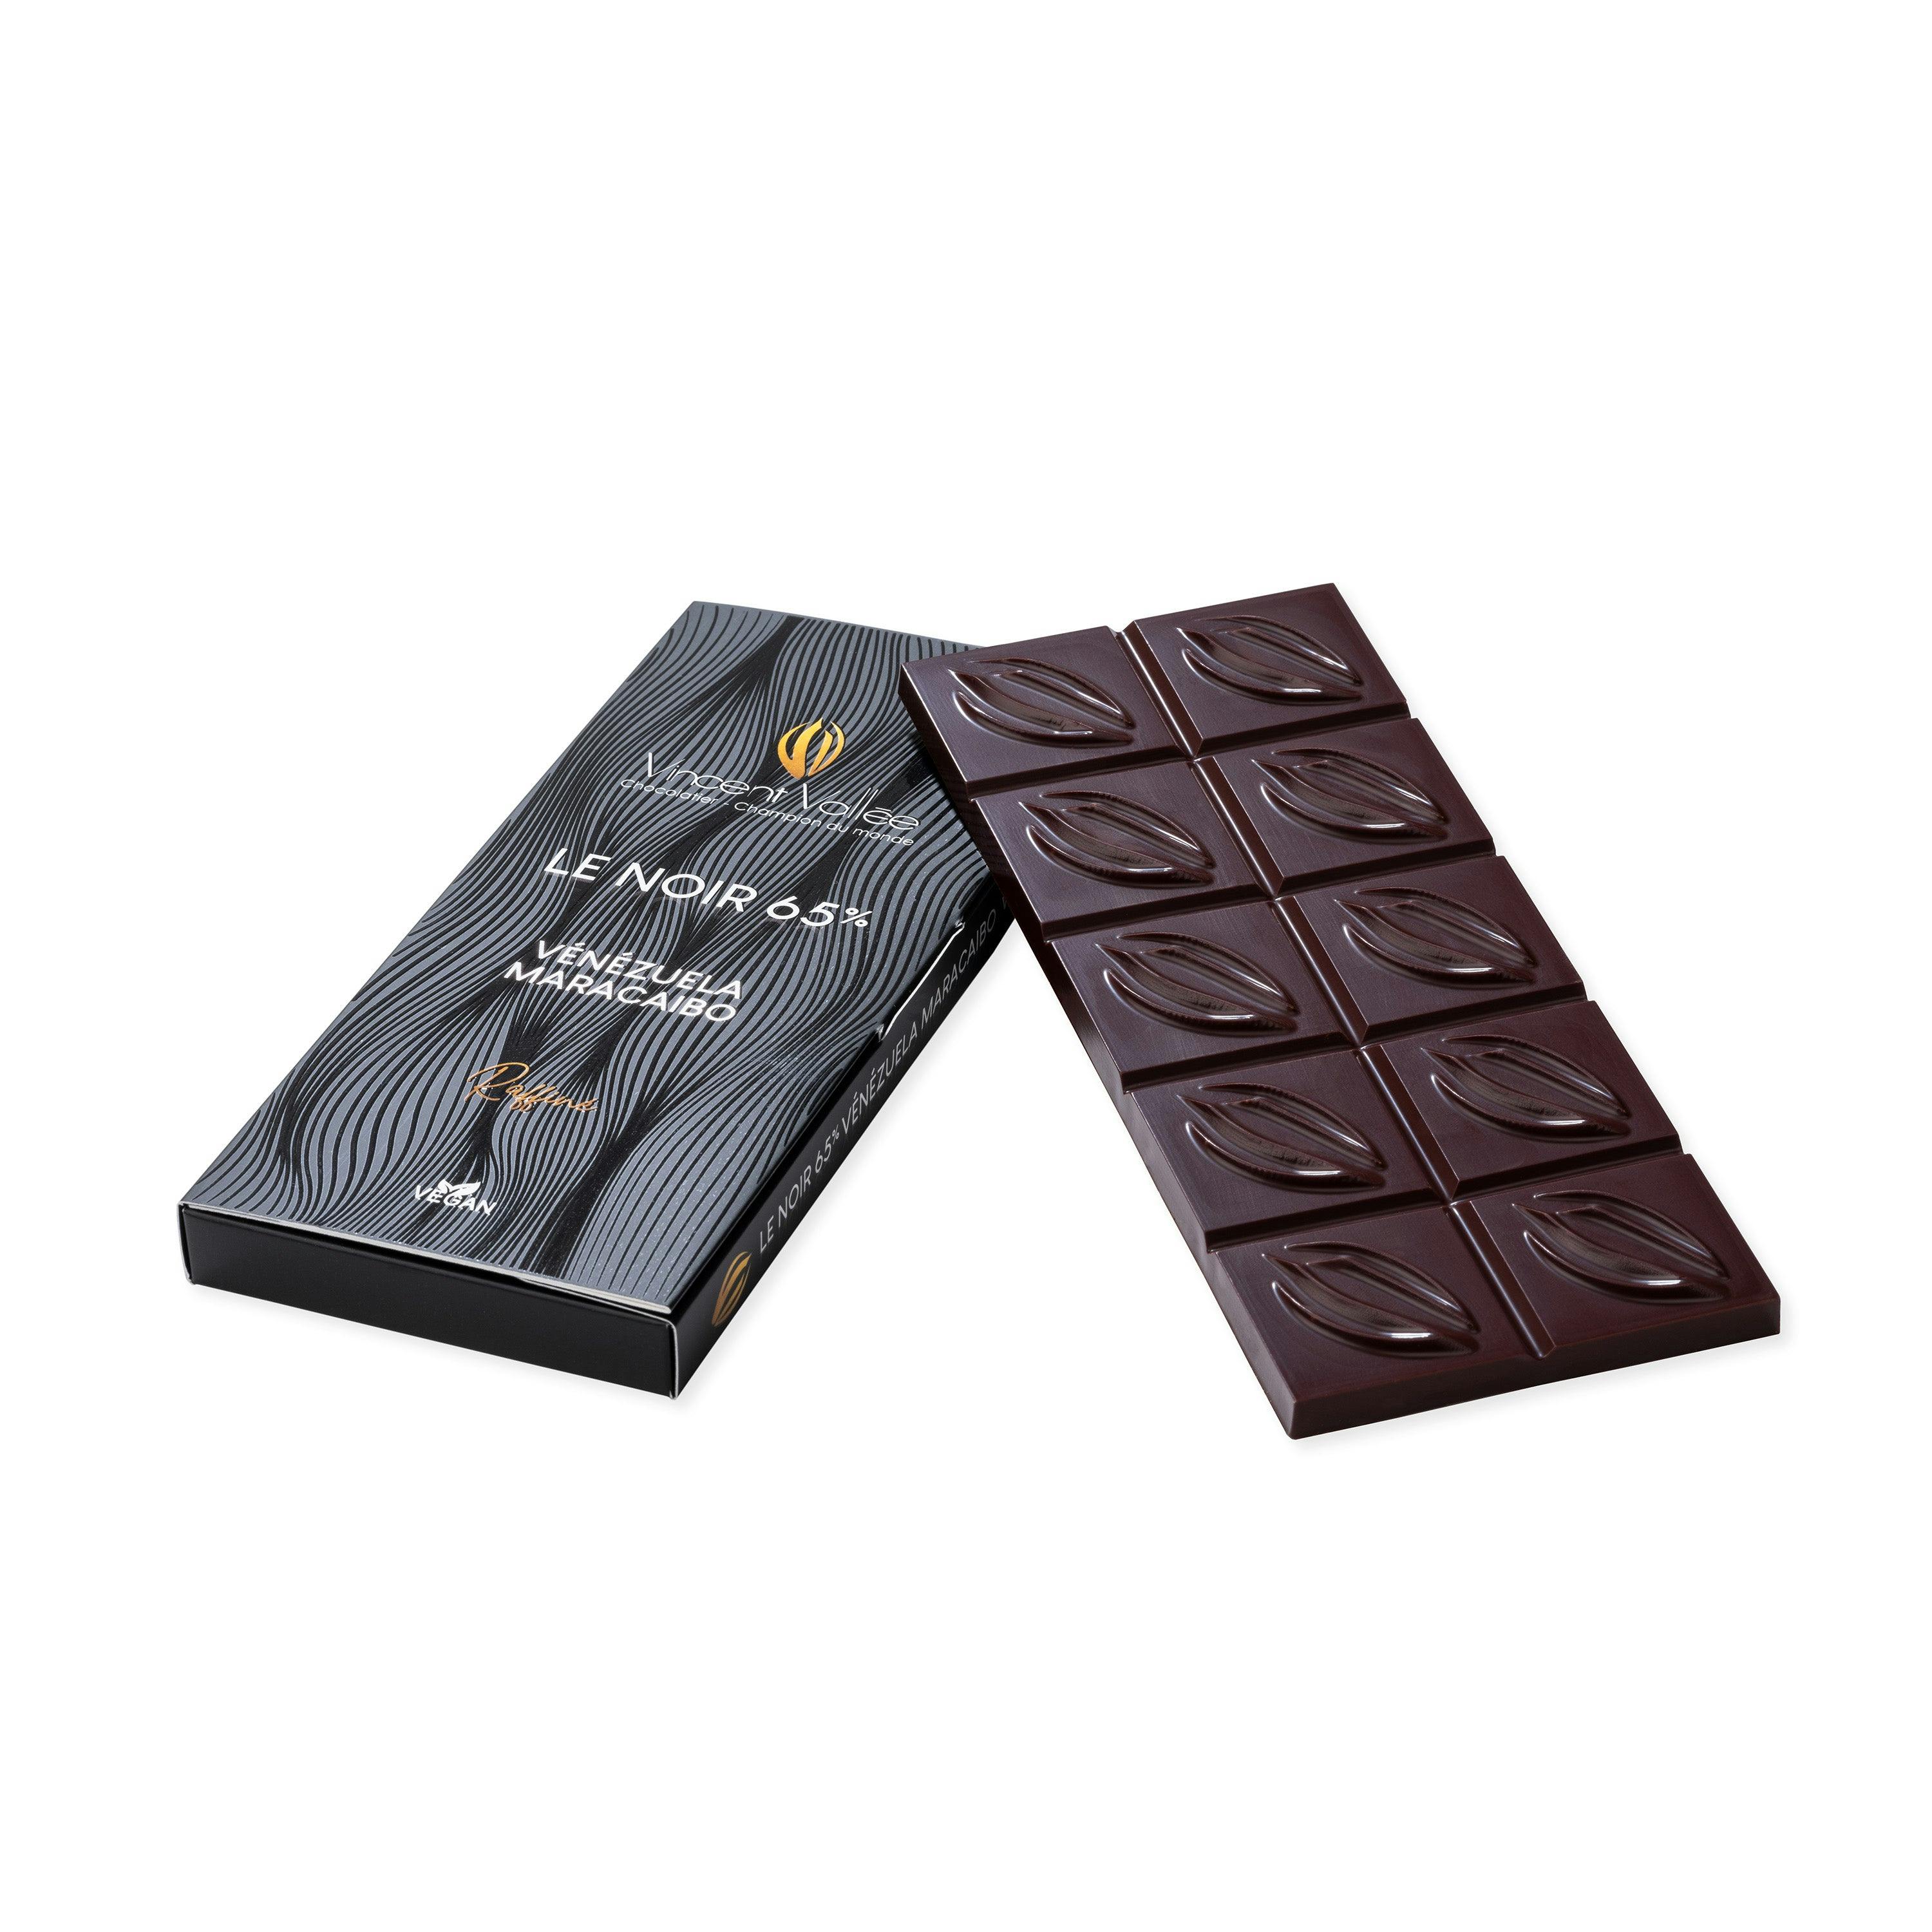 Maracaïbo 65% - Vincent Vallée world champion chocolatier